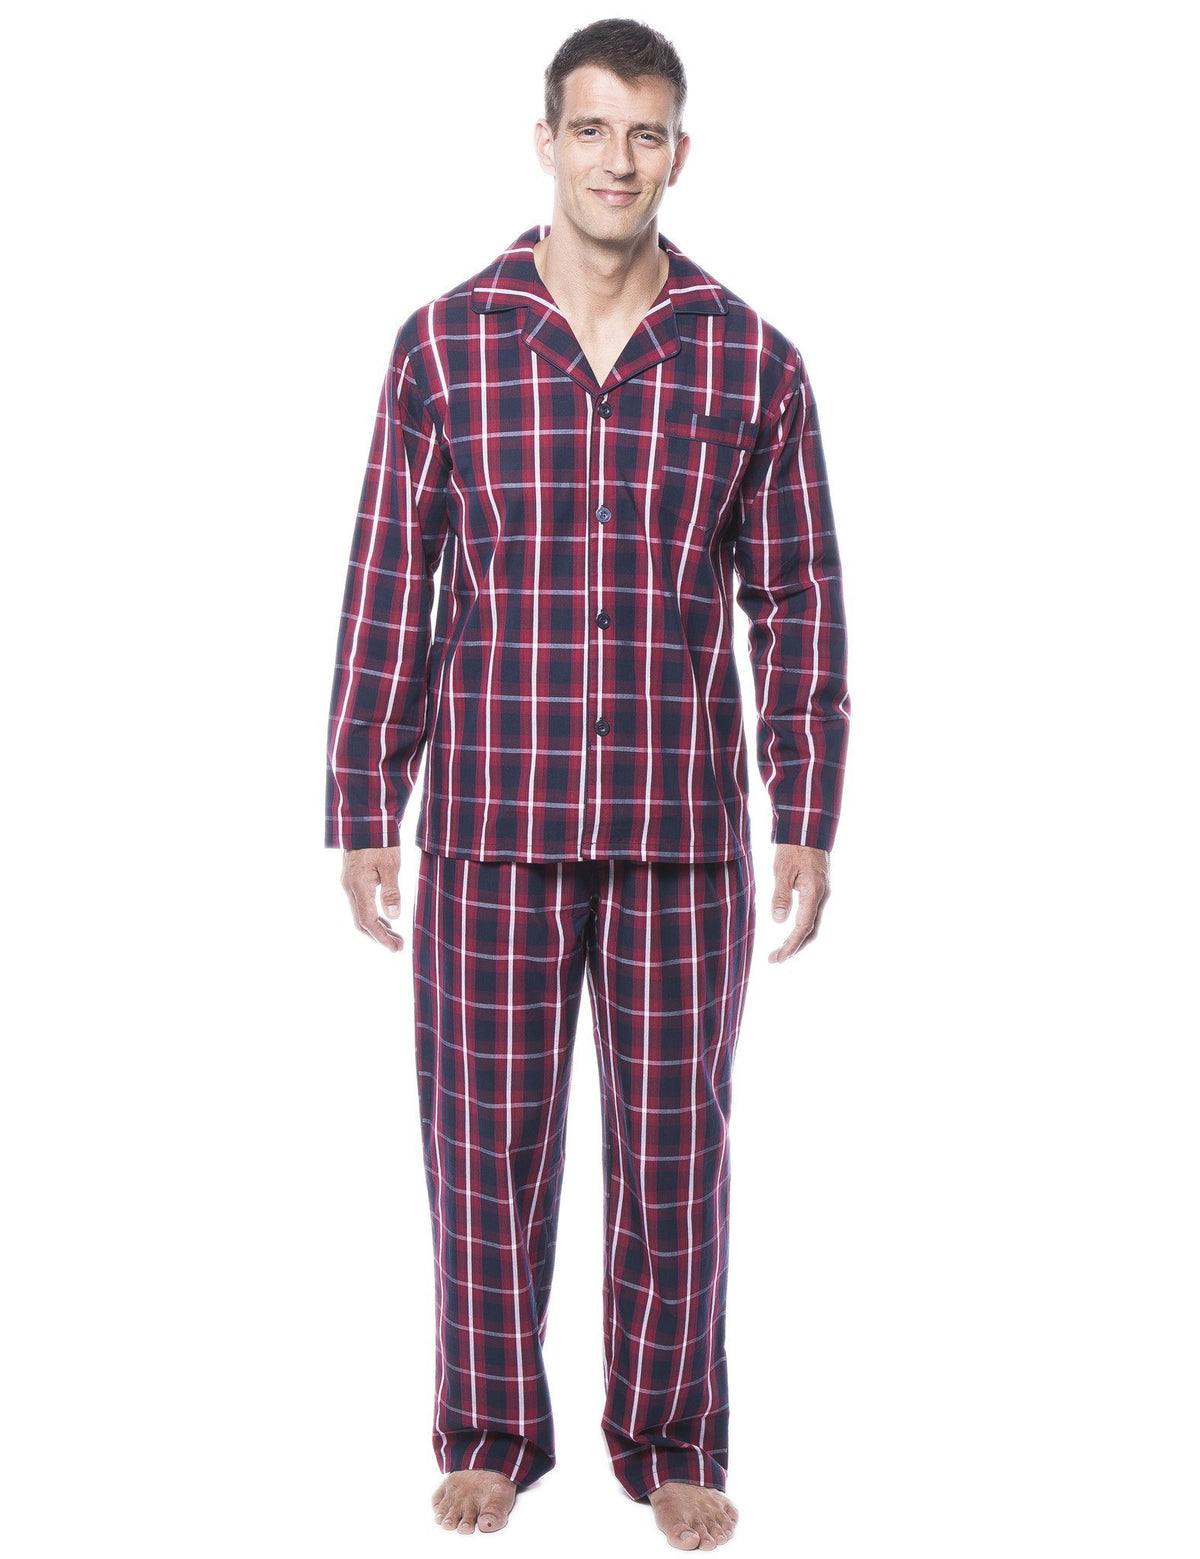 Men's 100% Woven Cotton Pajama Sleepwear Set - Patriotic Plaid